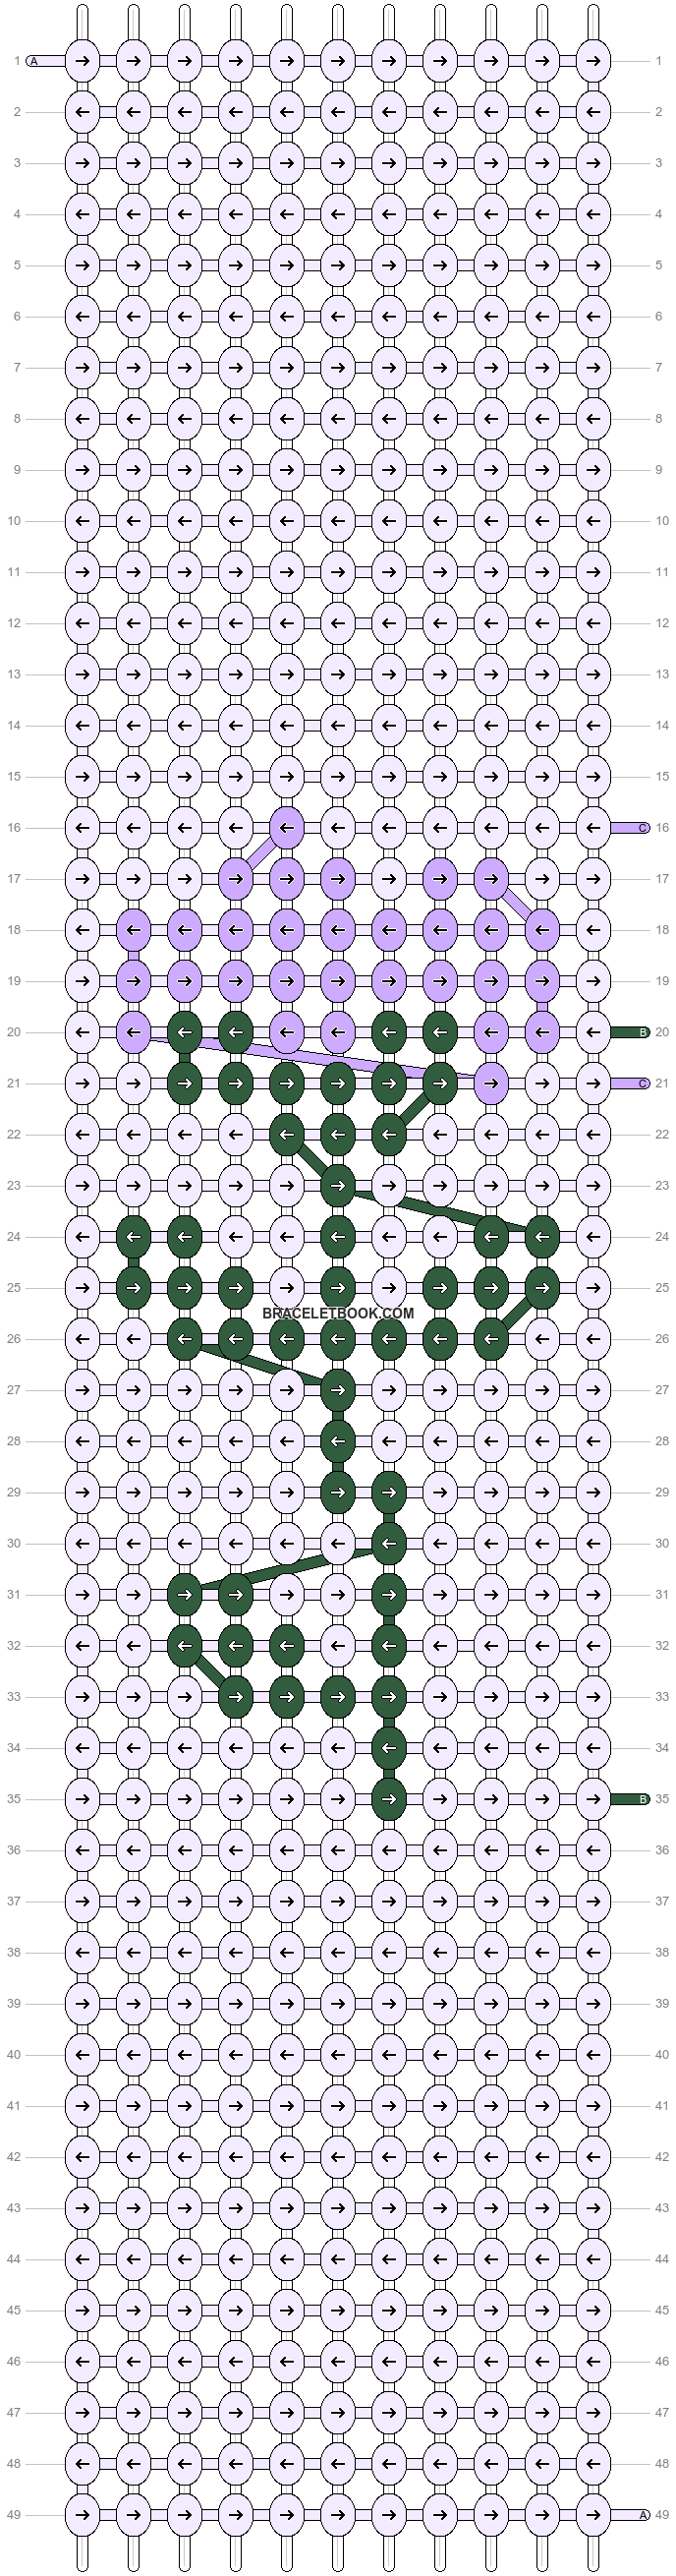 Alpha pattern #85987 variation #155645 pattern